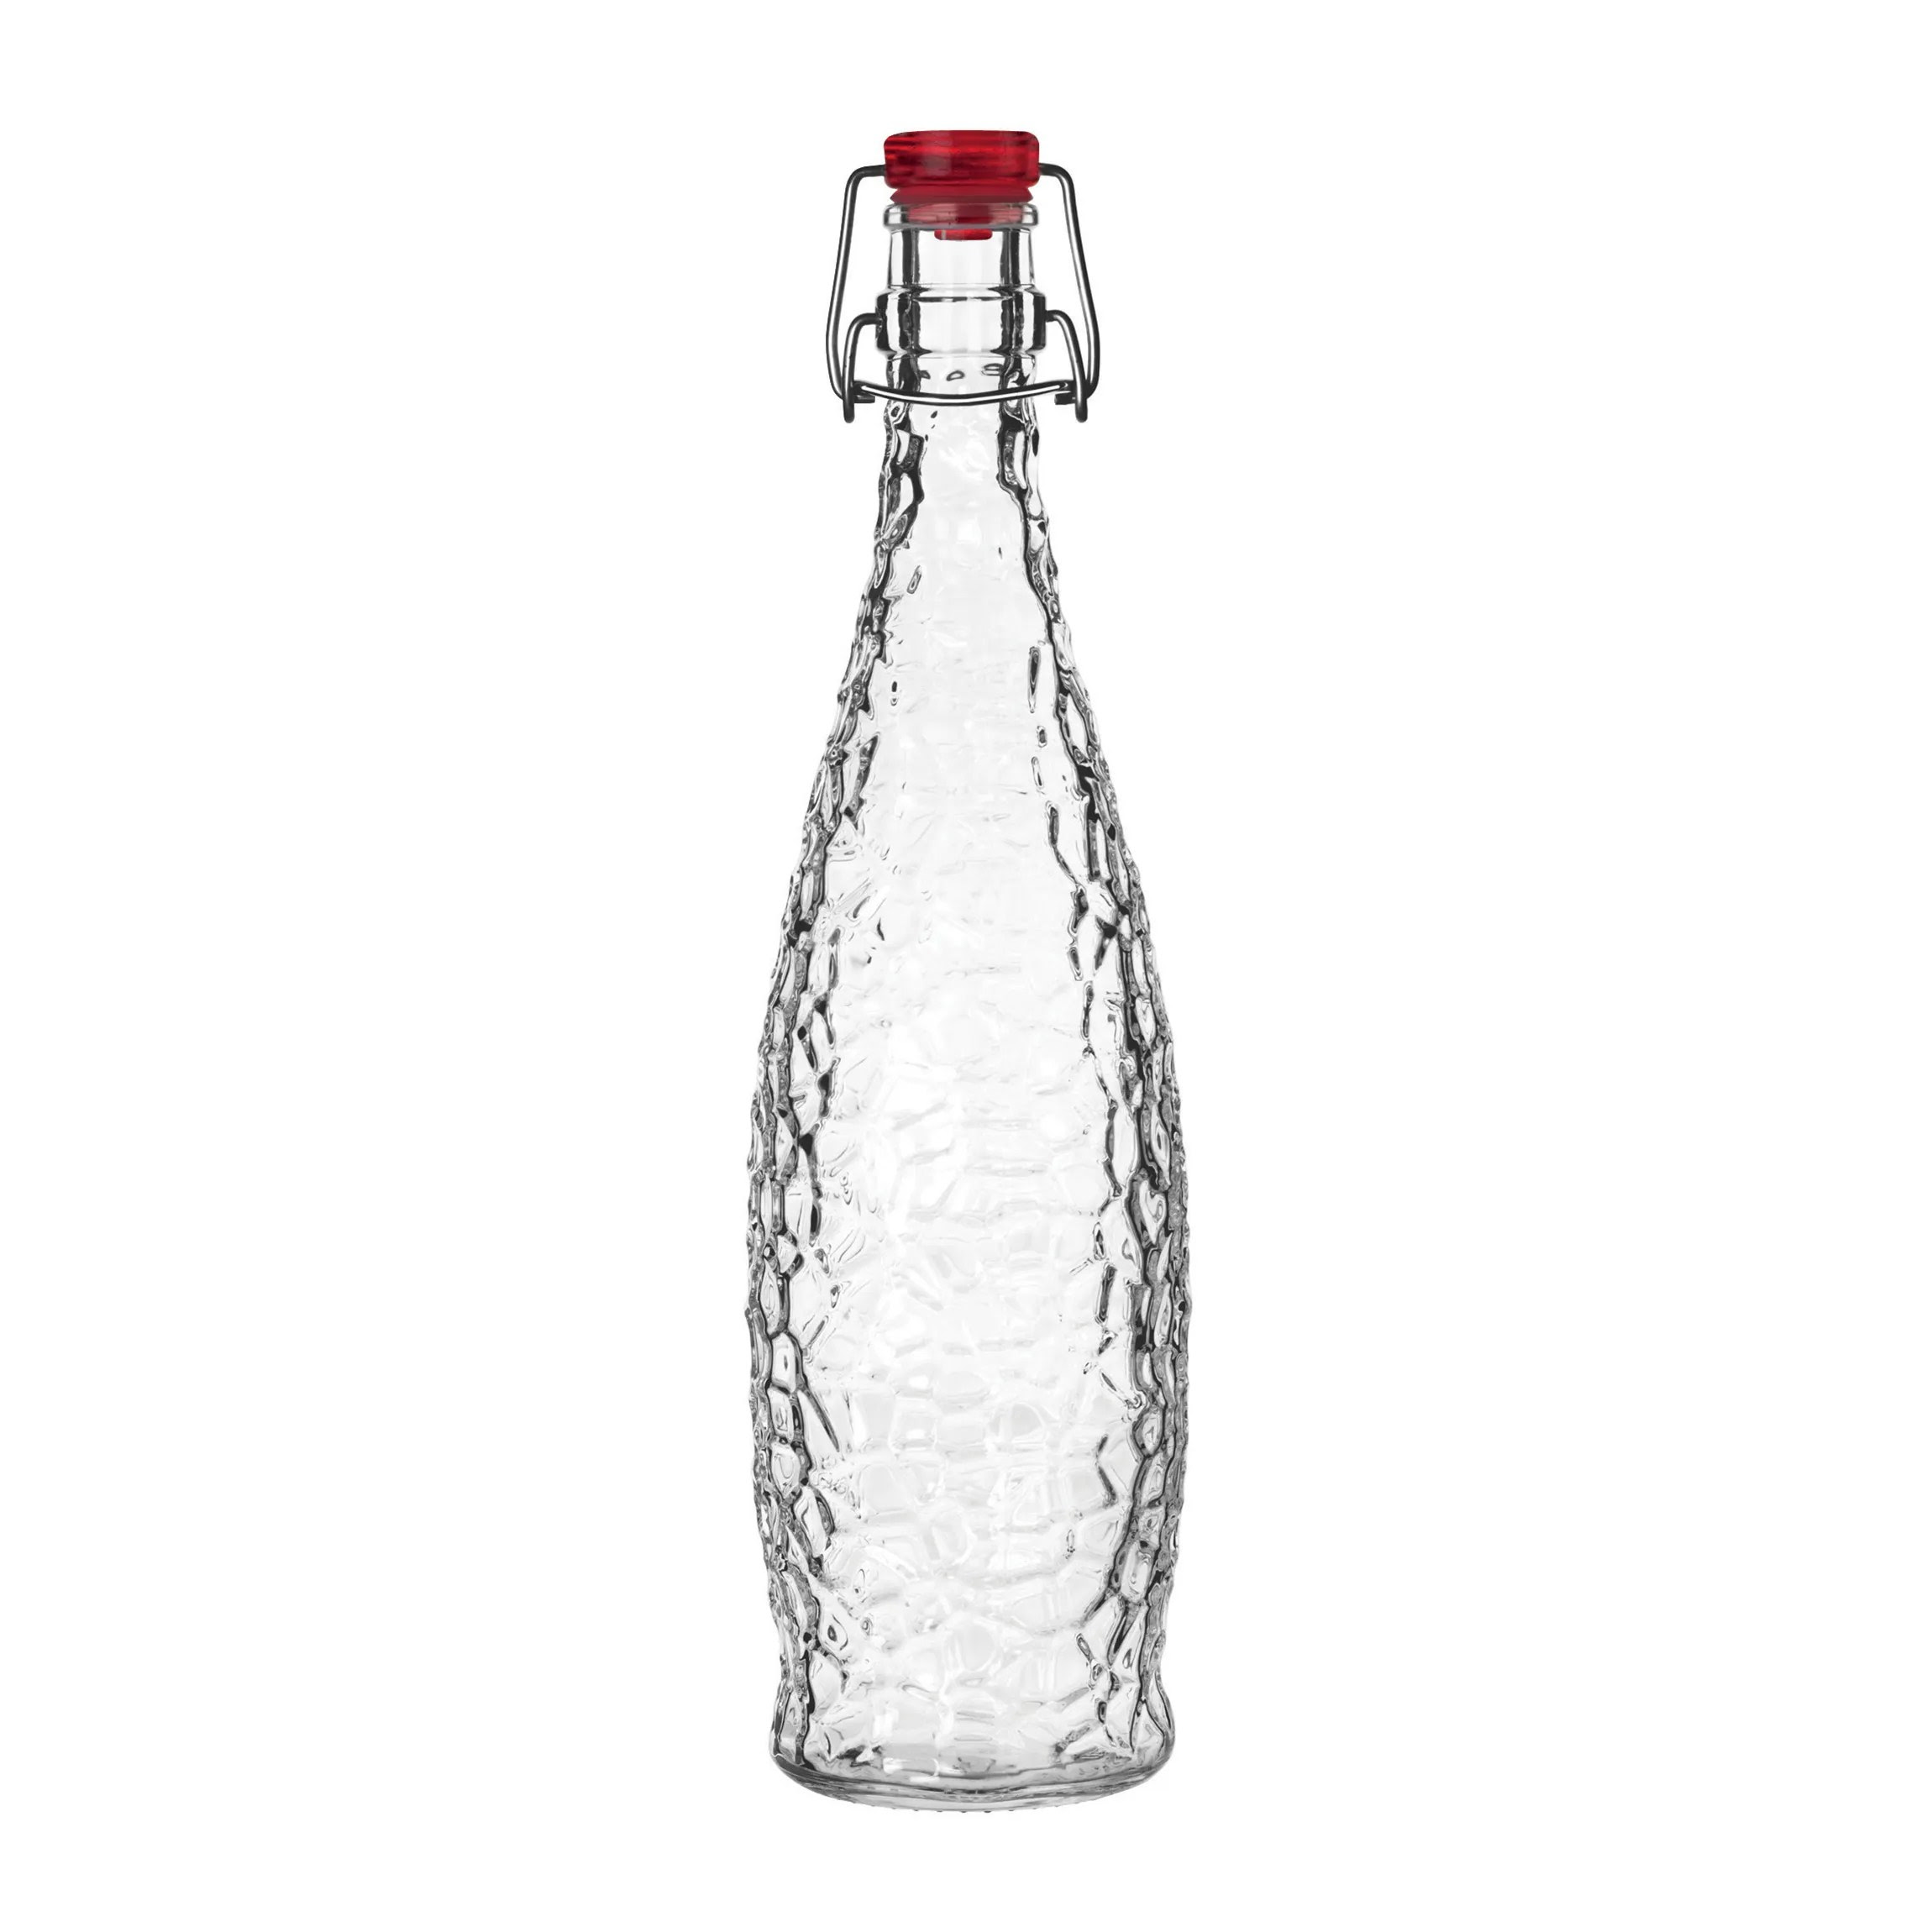 Libbey 13150121 33 7/8 oz Glacier Bottle w/ Red Clamp Top Lid Glass